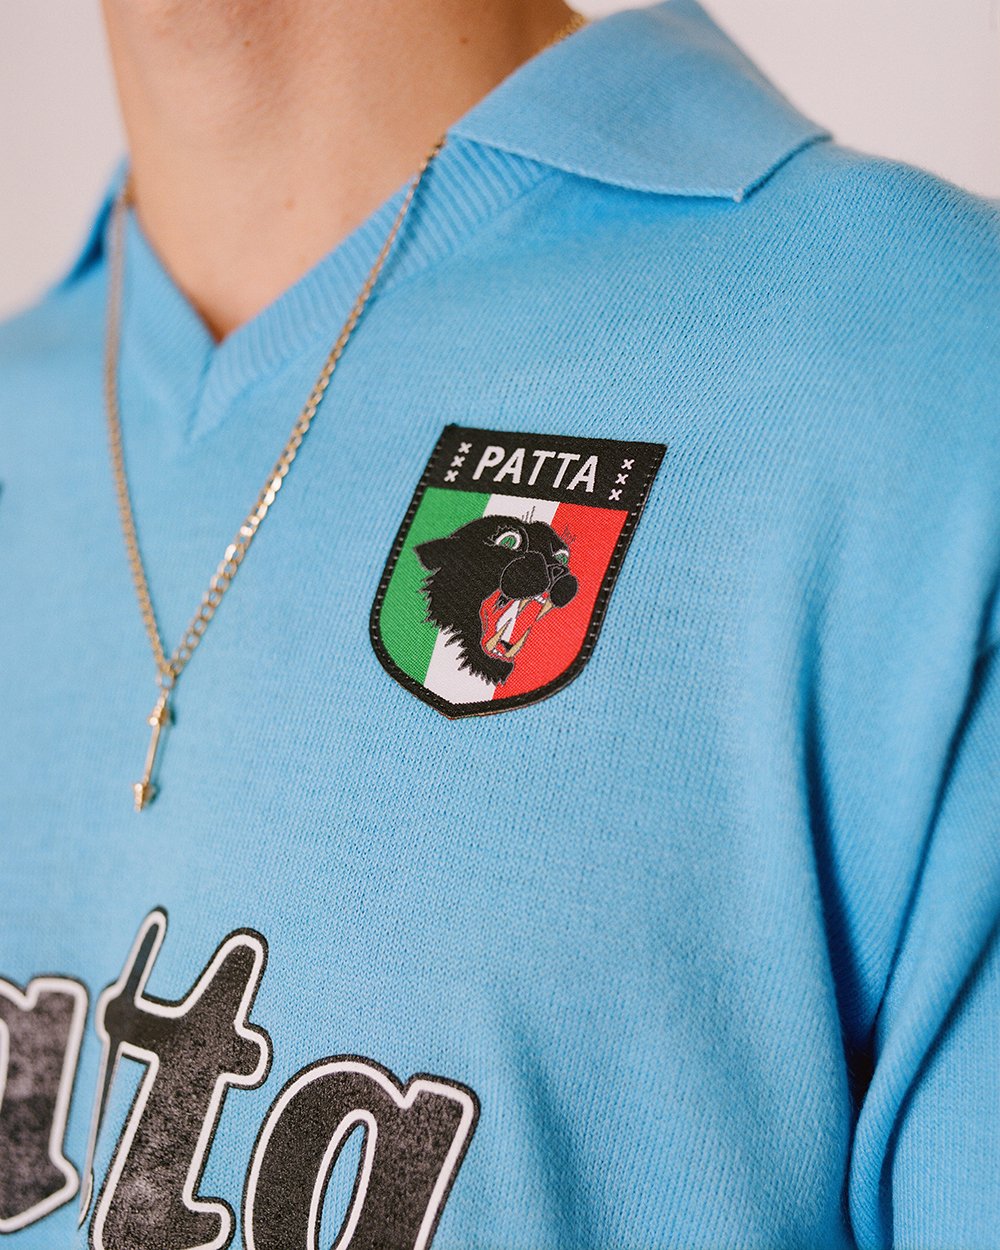 Positief De Kamer club Patta X Ennerre Napoli voetbalshirt - Voetbalshirts.com